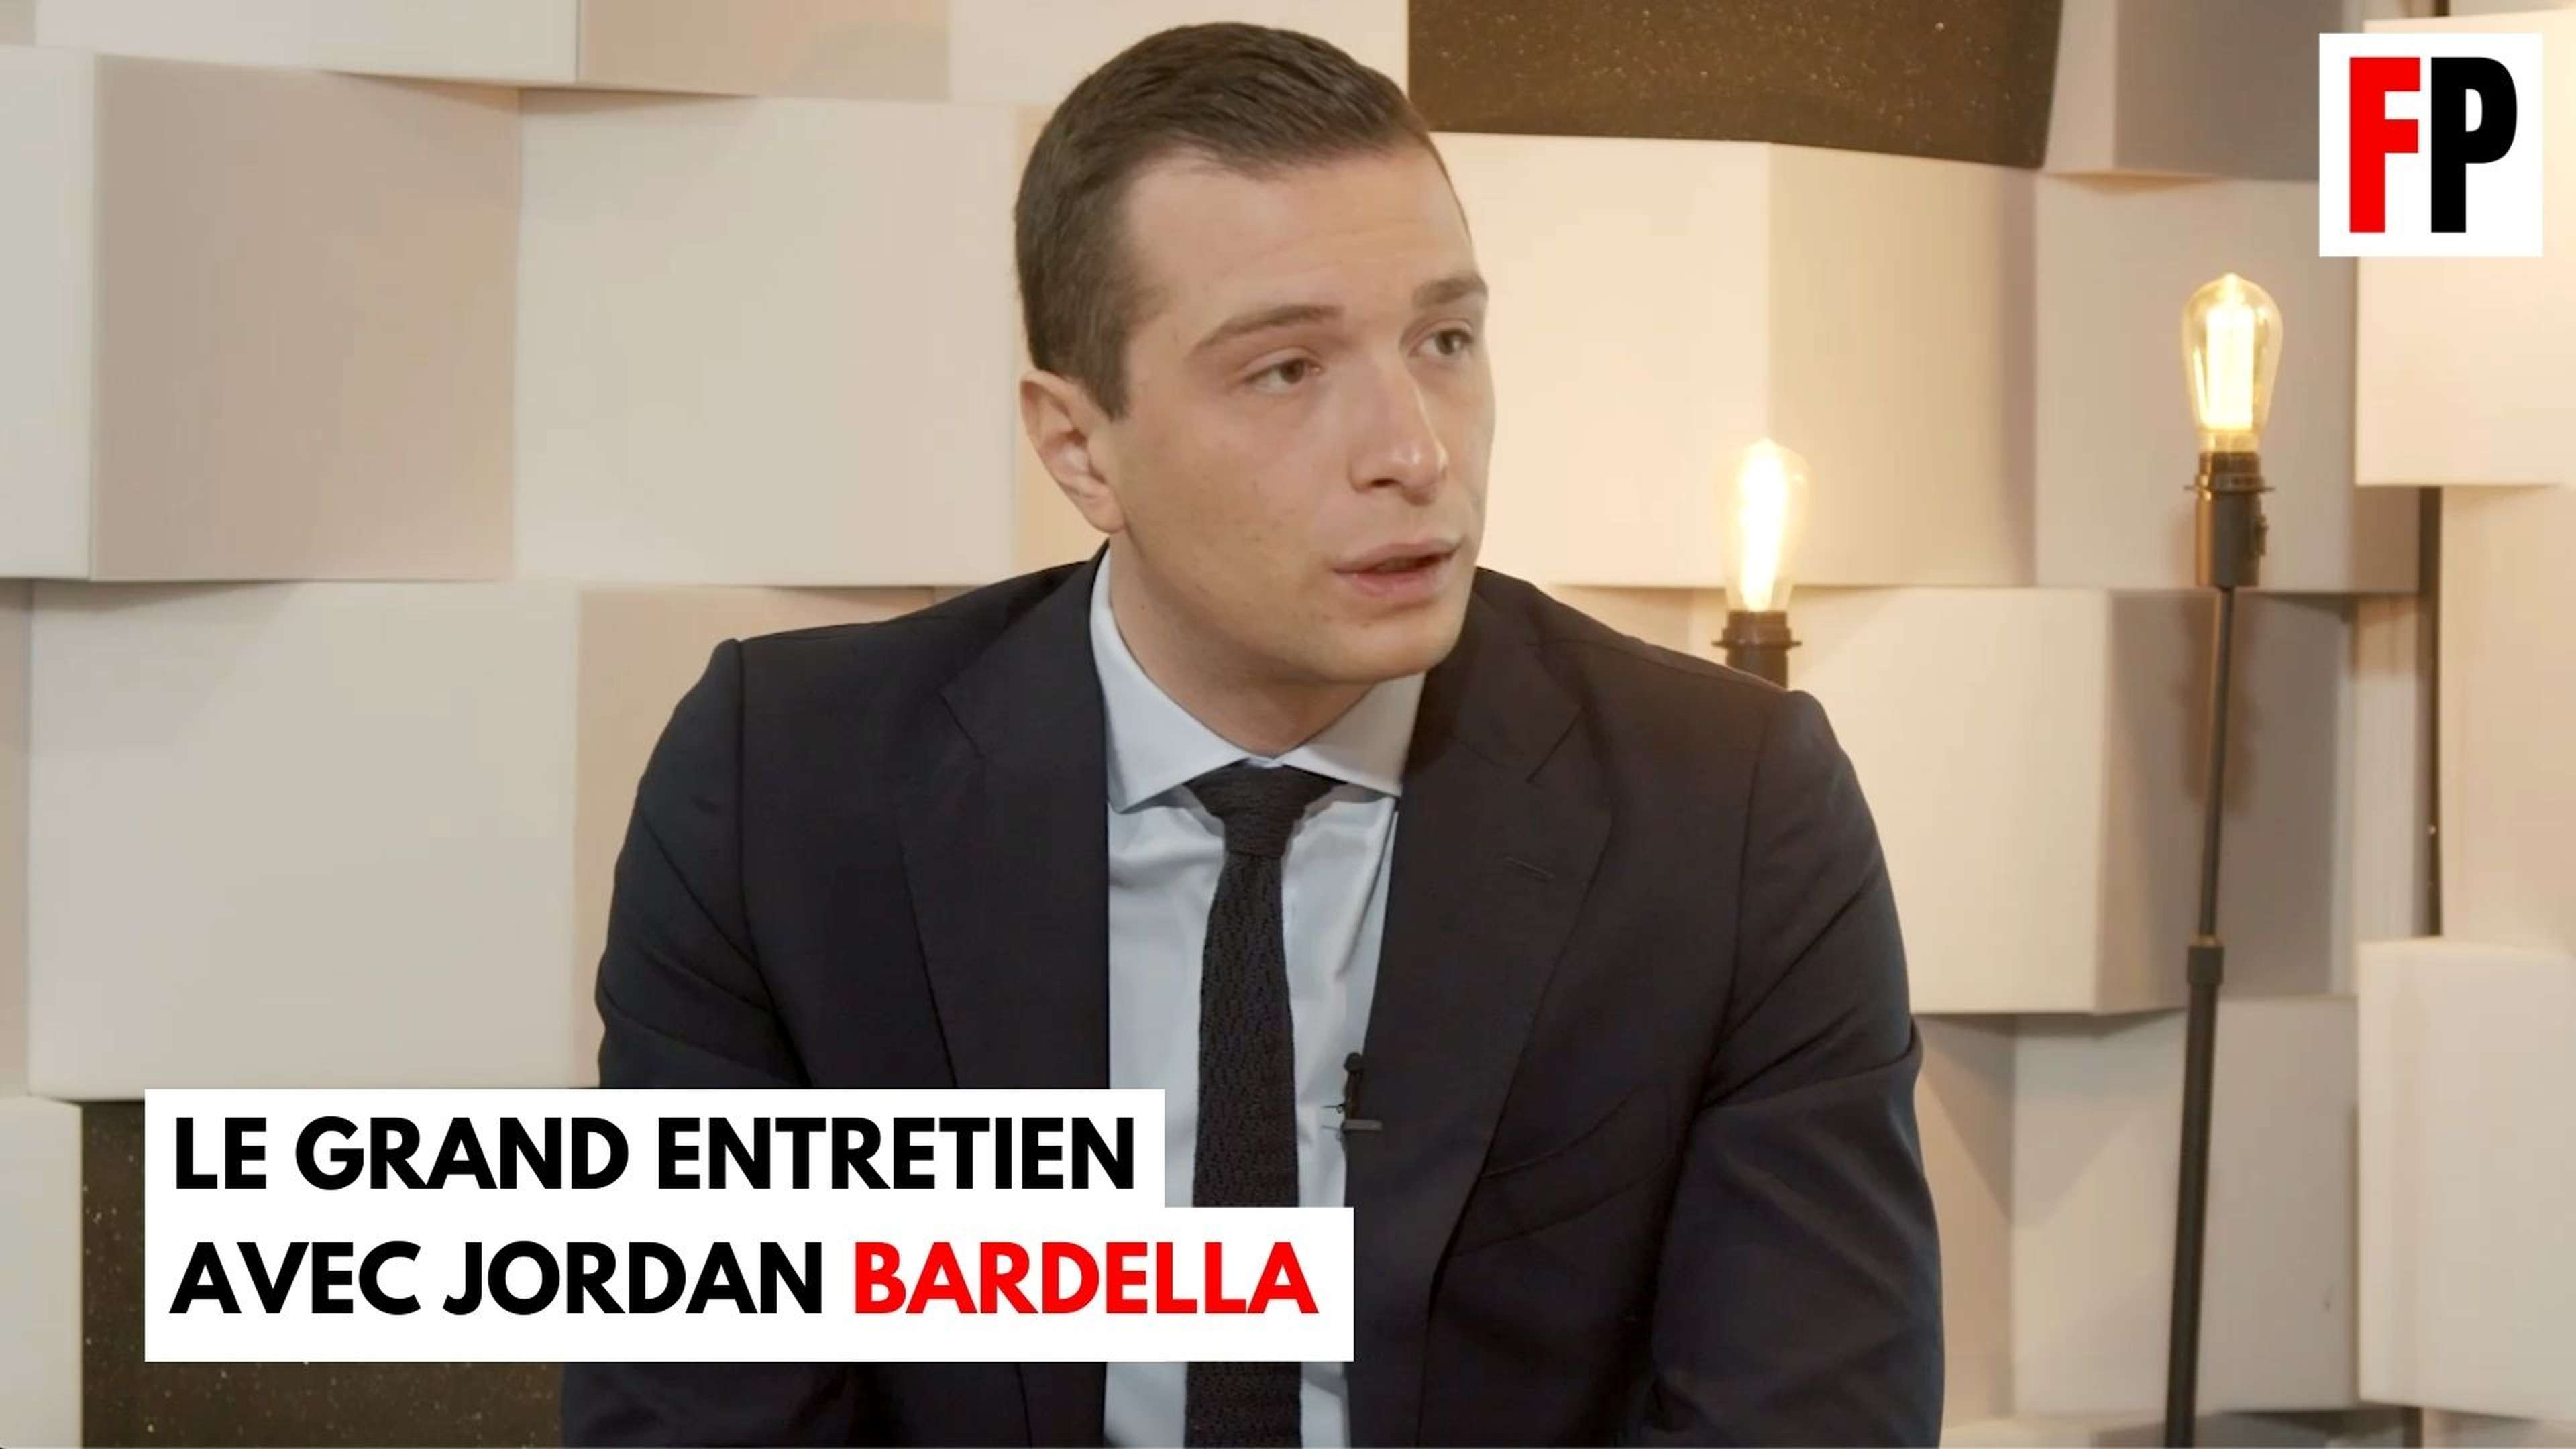 Le grand entretien avec Jordan Bardella